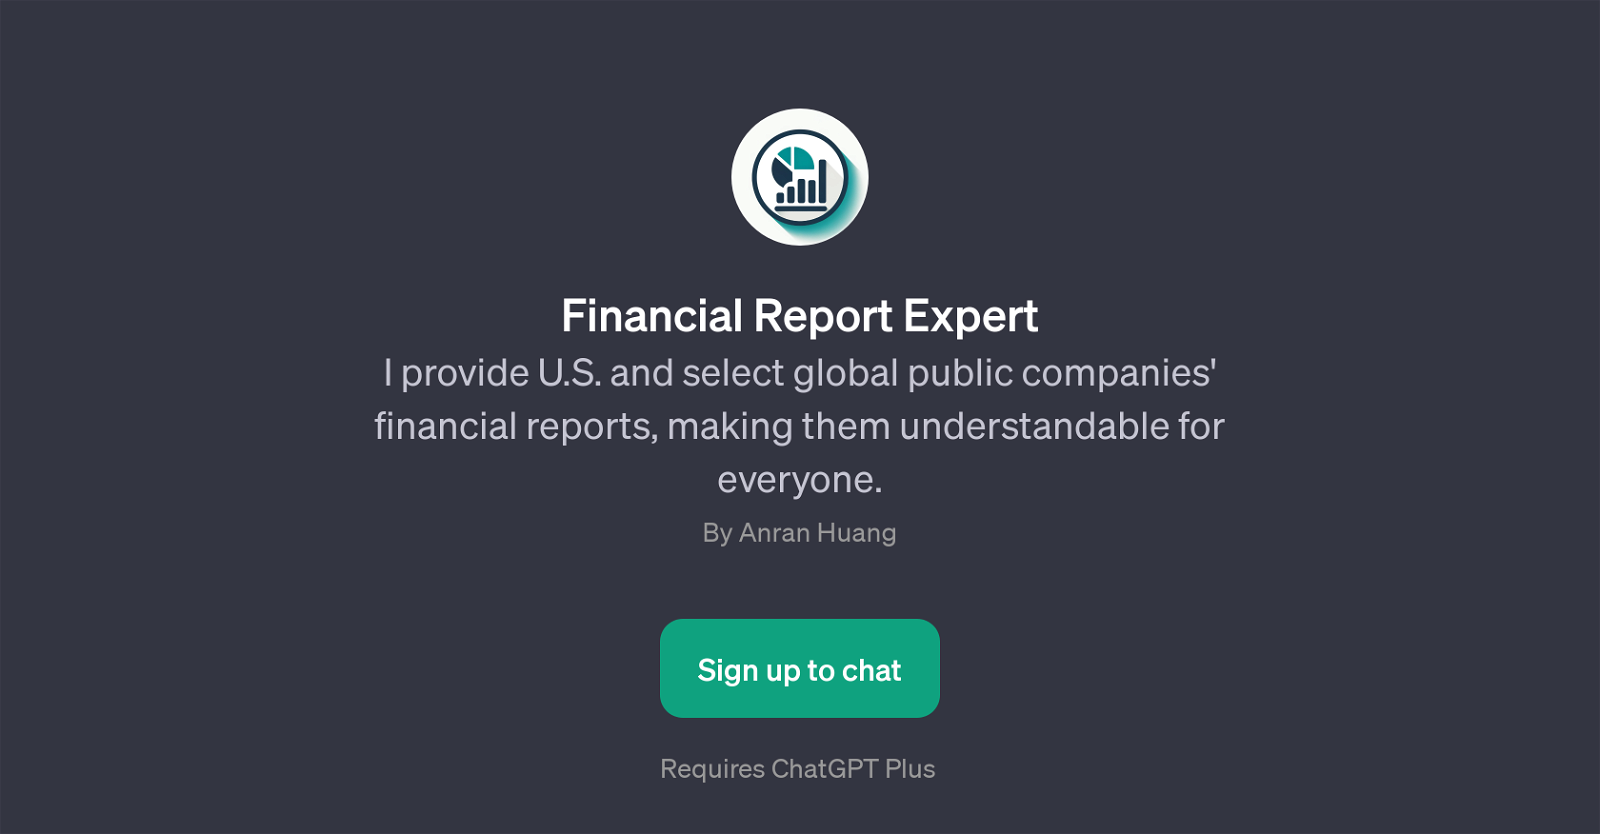 Financial Report Expert website